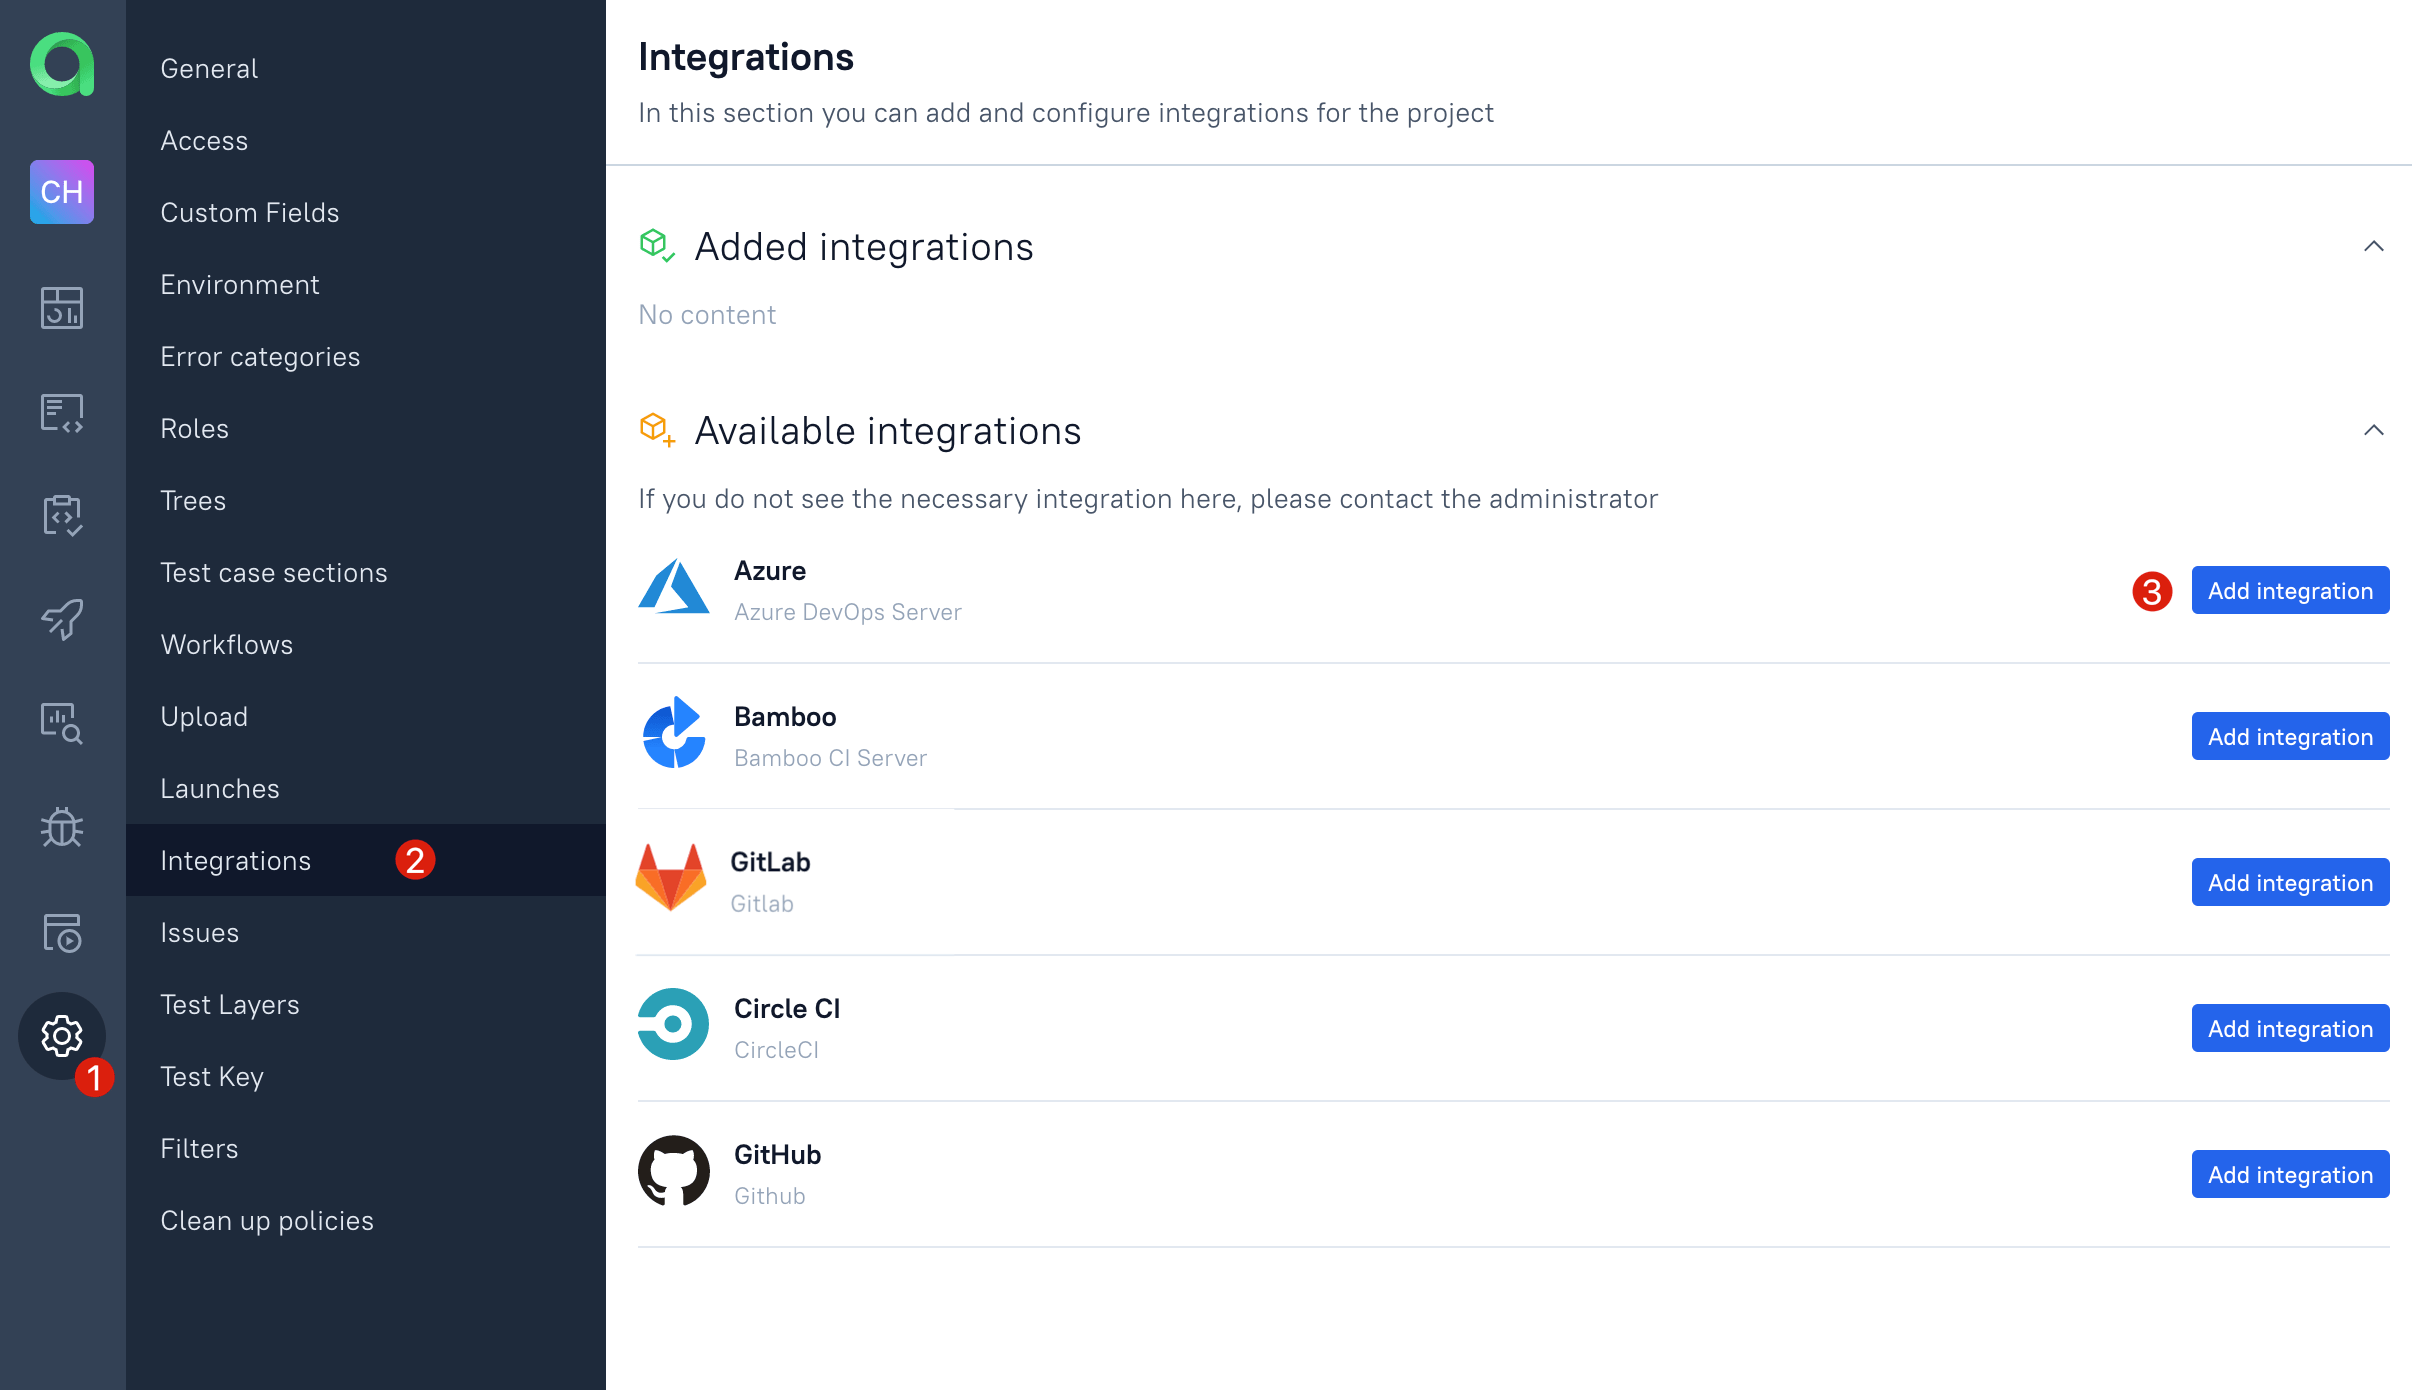 Global settings - adding integration